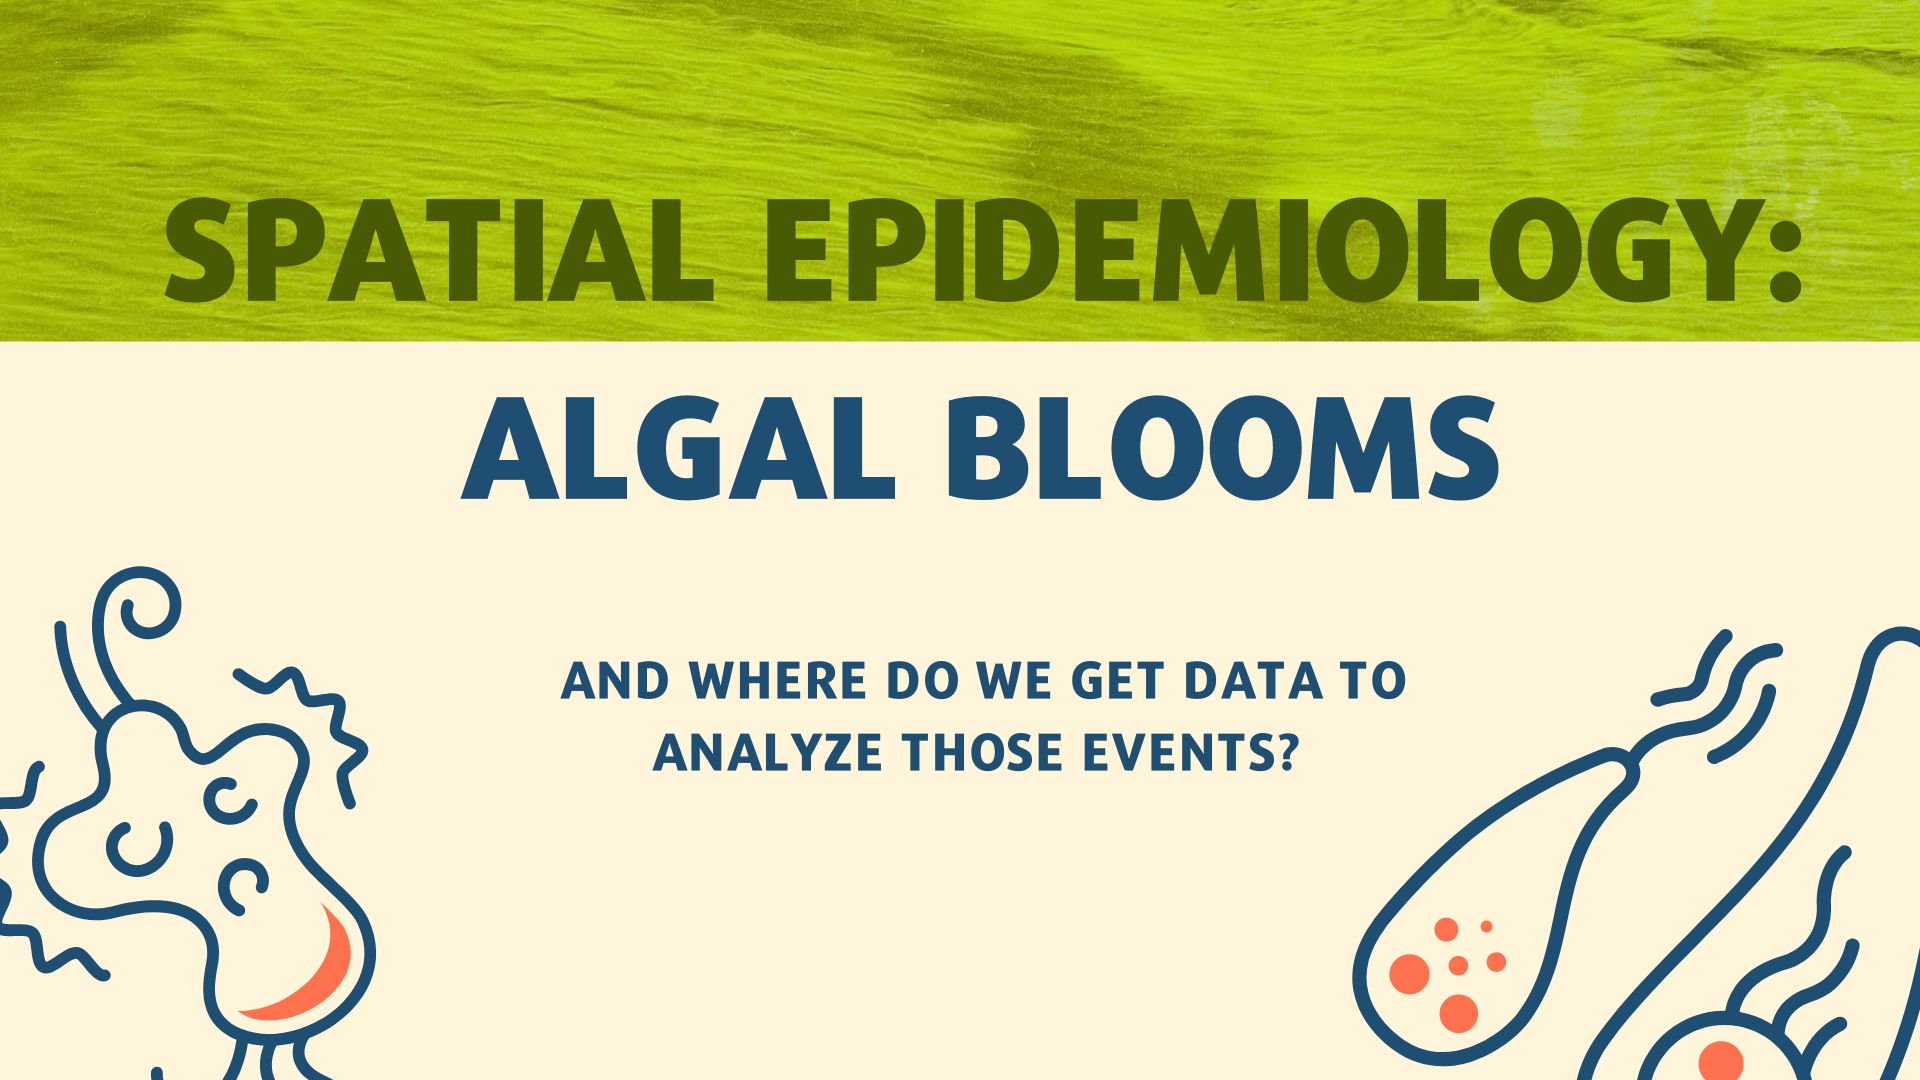 Spatial Epidemiology: Algal Blooms